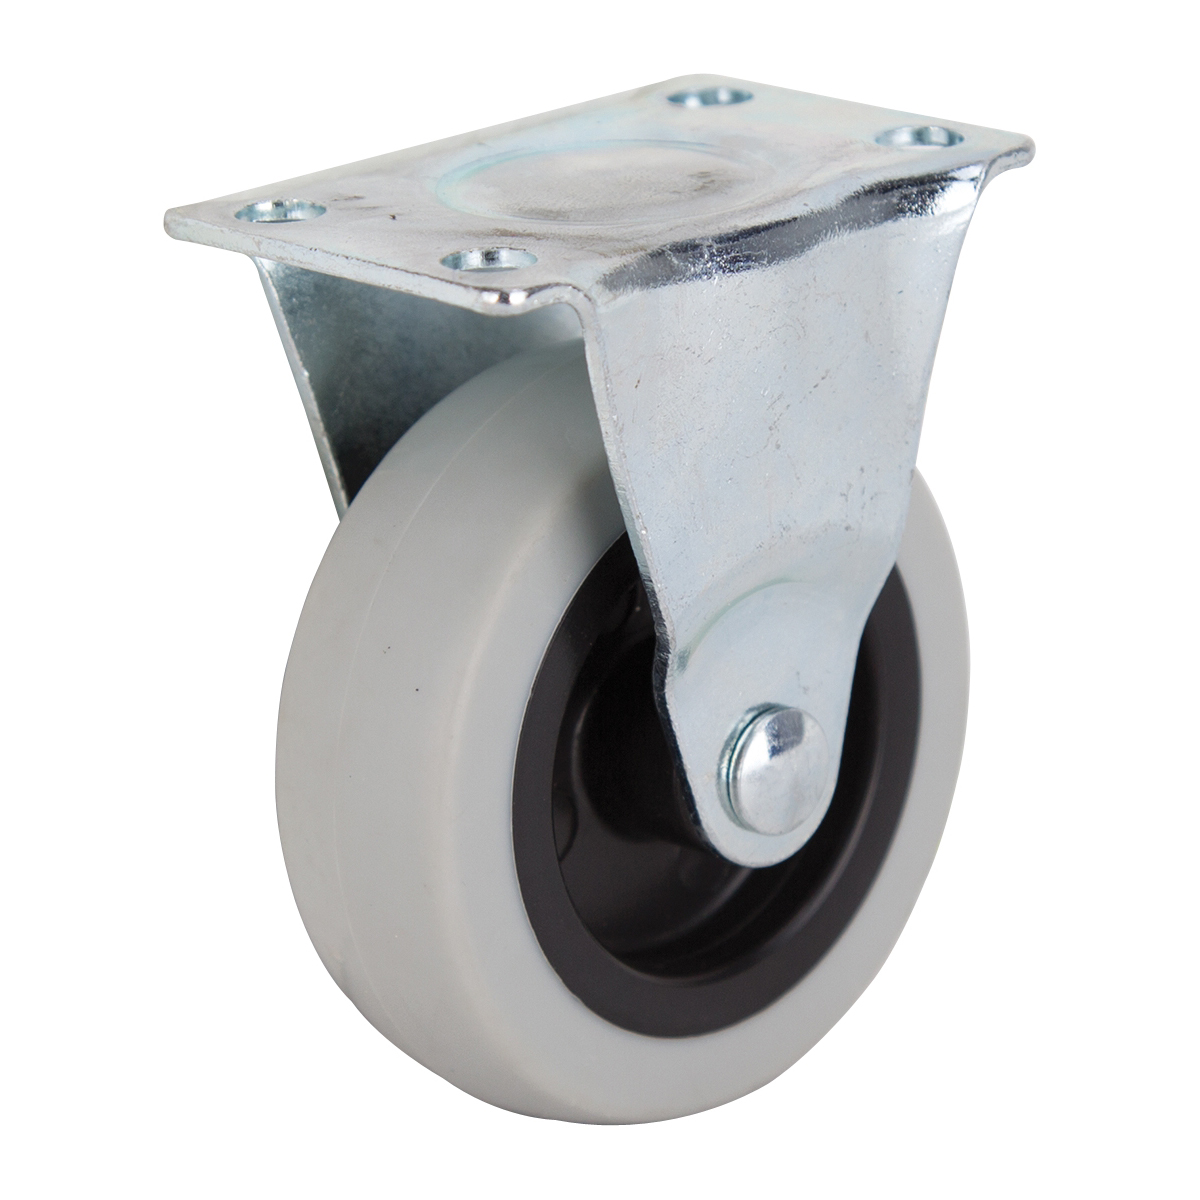 JC-N02-G Rigid Caster, 3 in Dia Wheel, 24 mm W Wheel, Thermoplastic Rubber Wheel, Gray, 130 lb